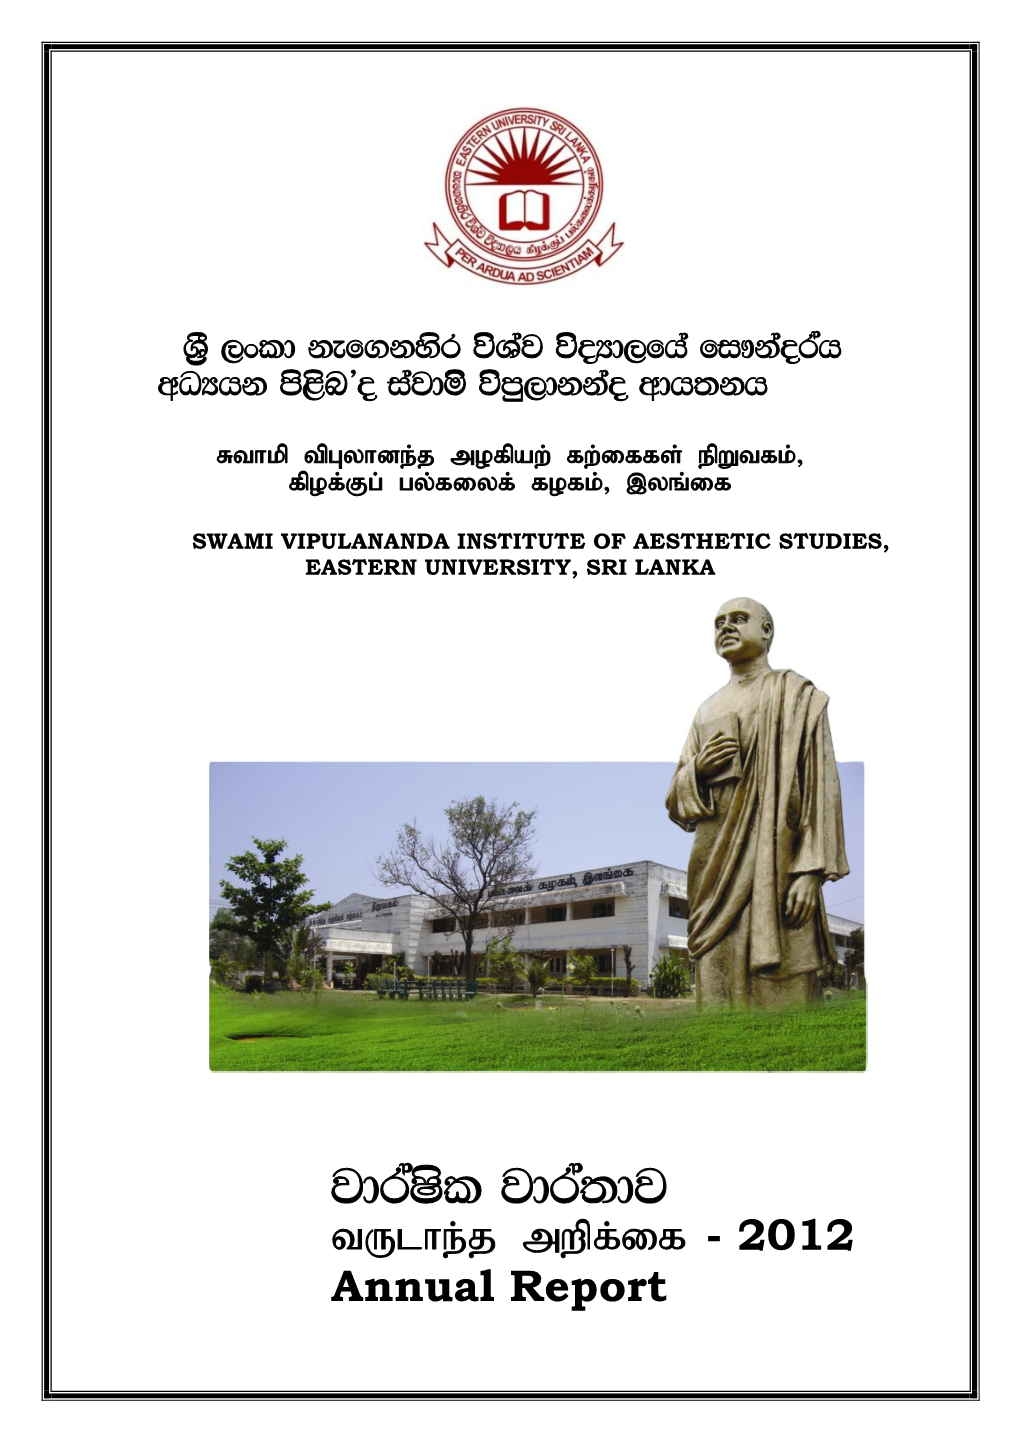 Annual Report of the Swami Vipulananda Institute of Aesthetic